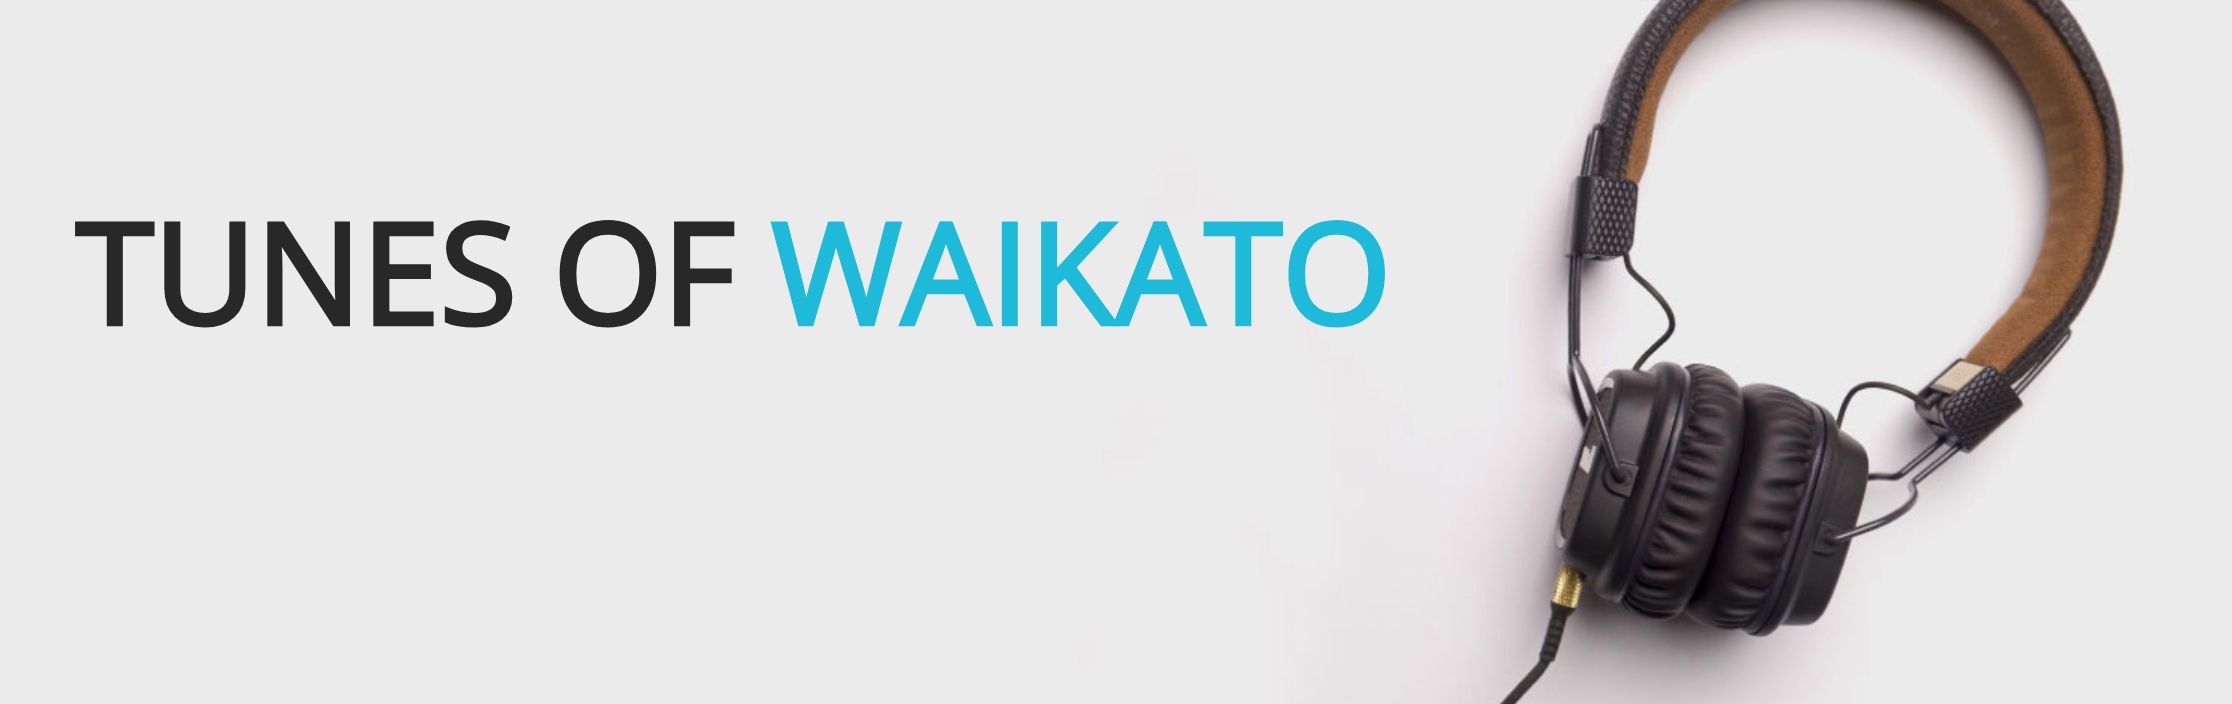 tunes of waikato